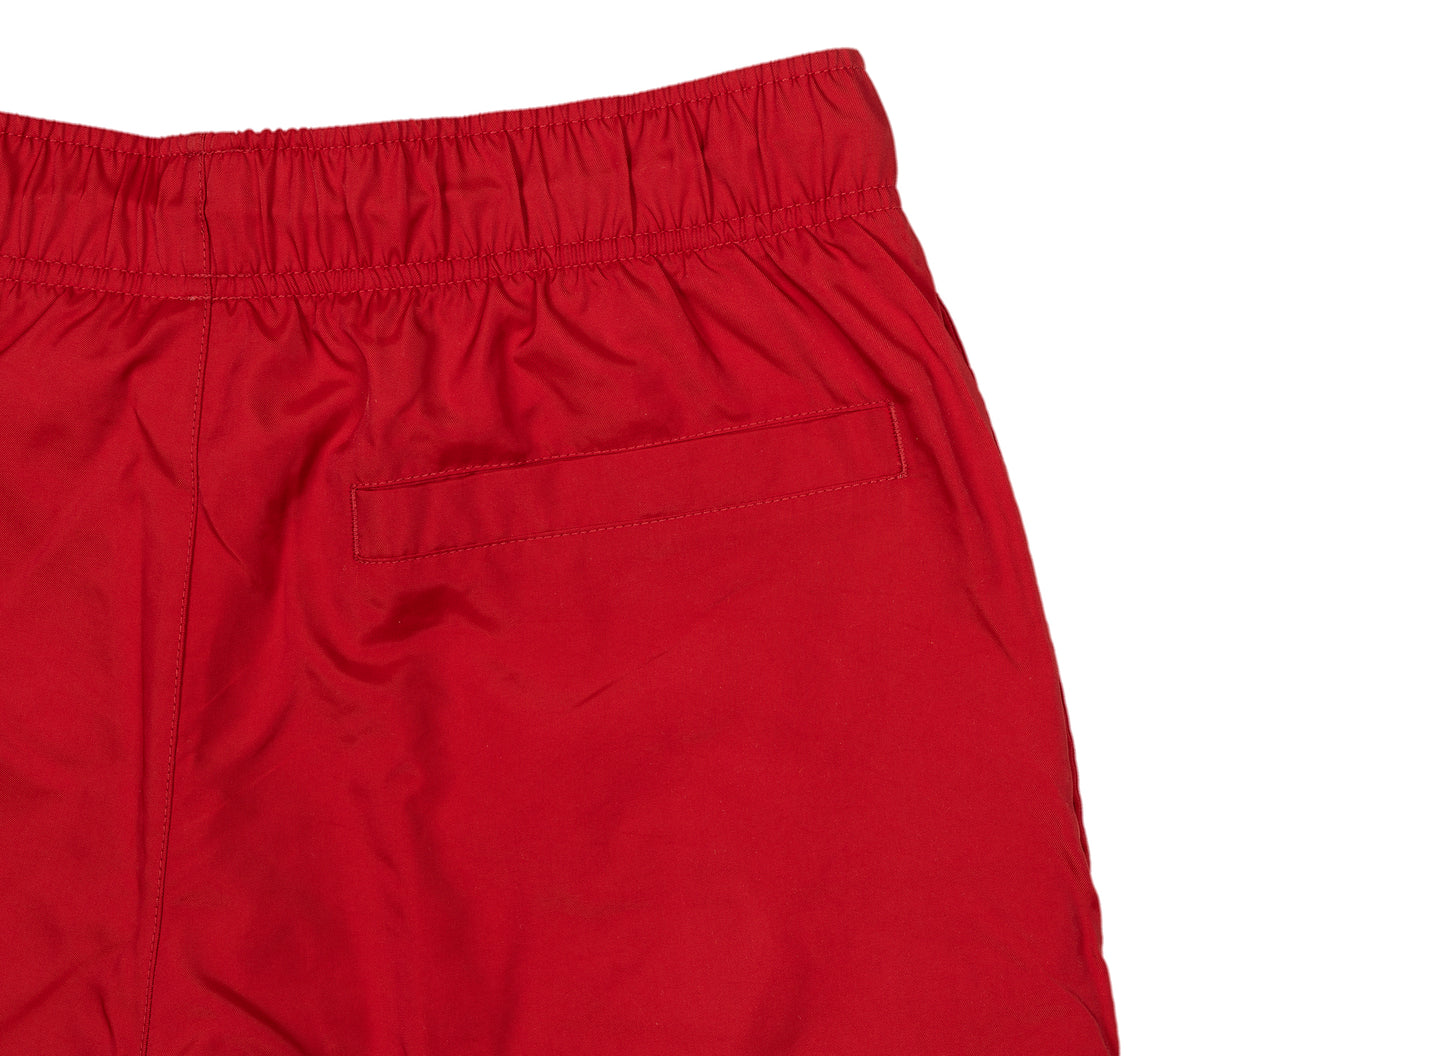 Jordan Jumpman Poolside Shorts in Red